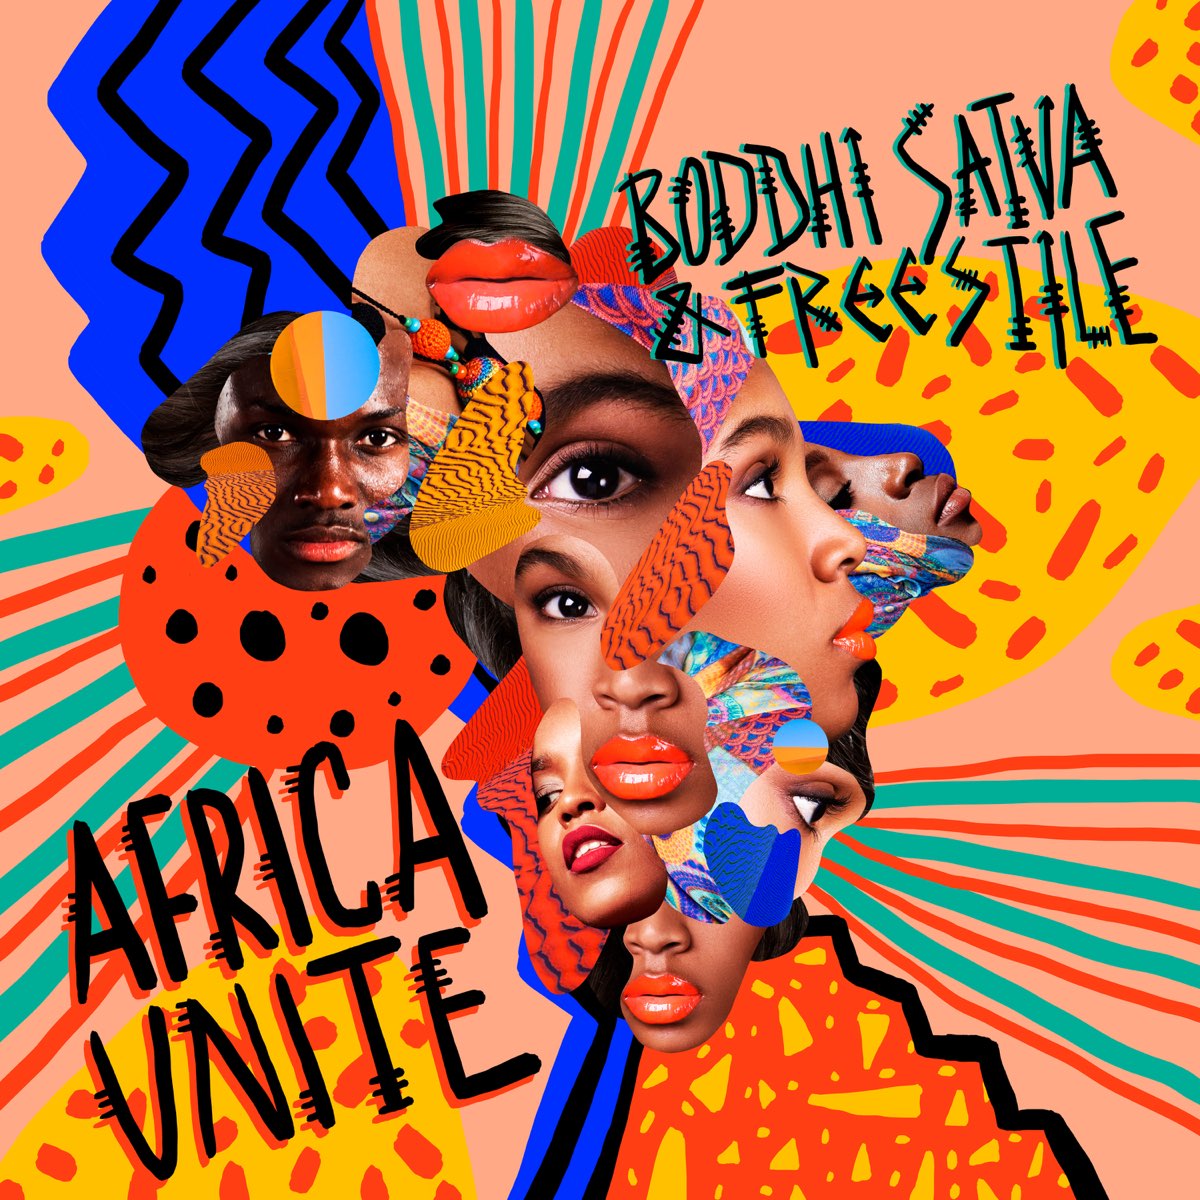 Afro плакат. Альбом Африка яркий Кадр. Карнавал Постер. Afrobeat. Africa unite